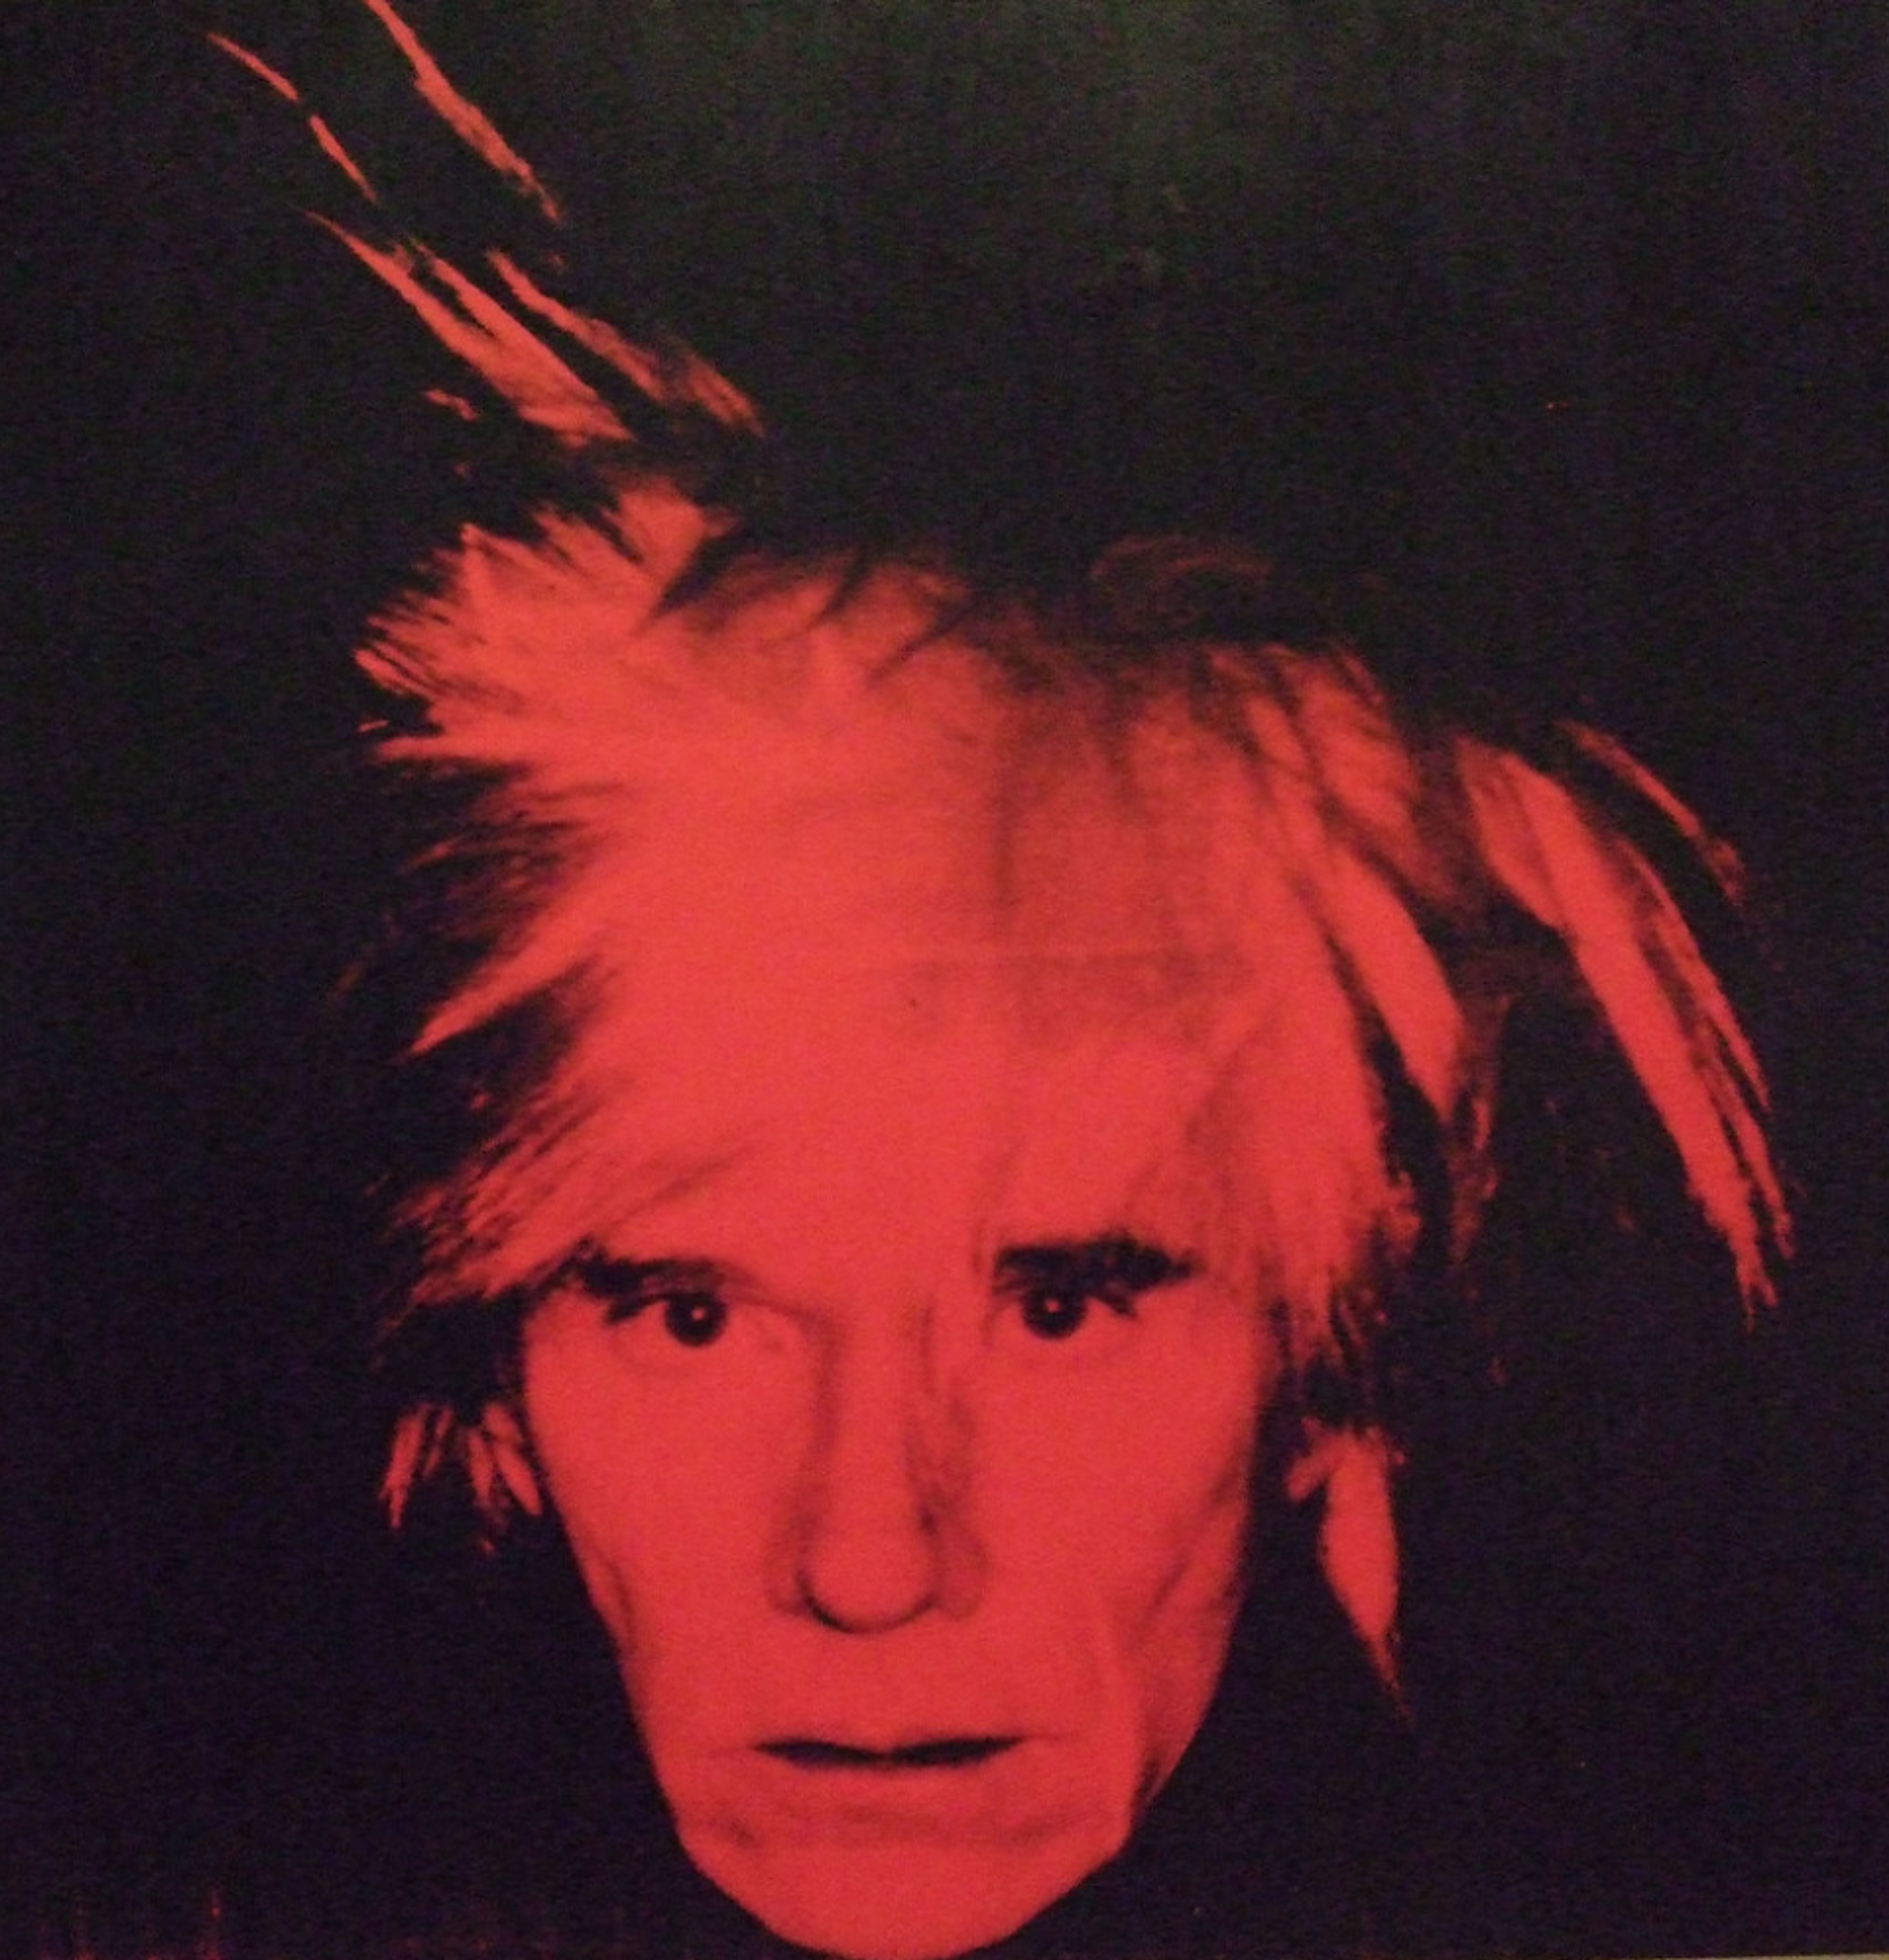 Self-Portrait (1986) by Andy Warhol